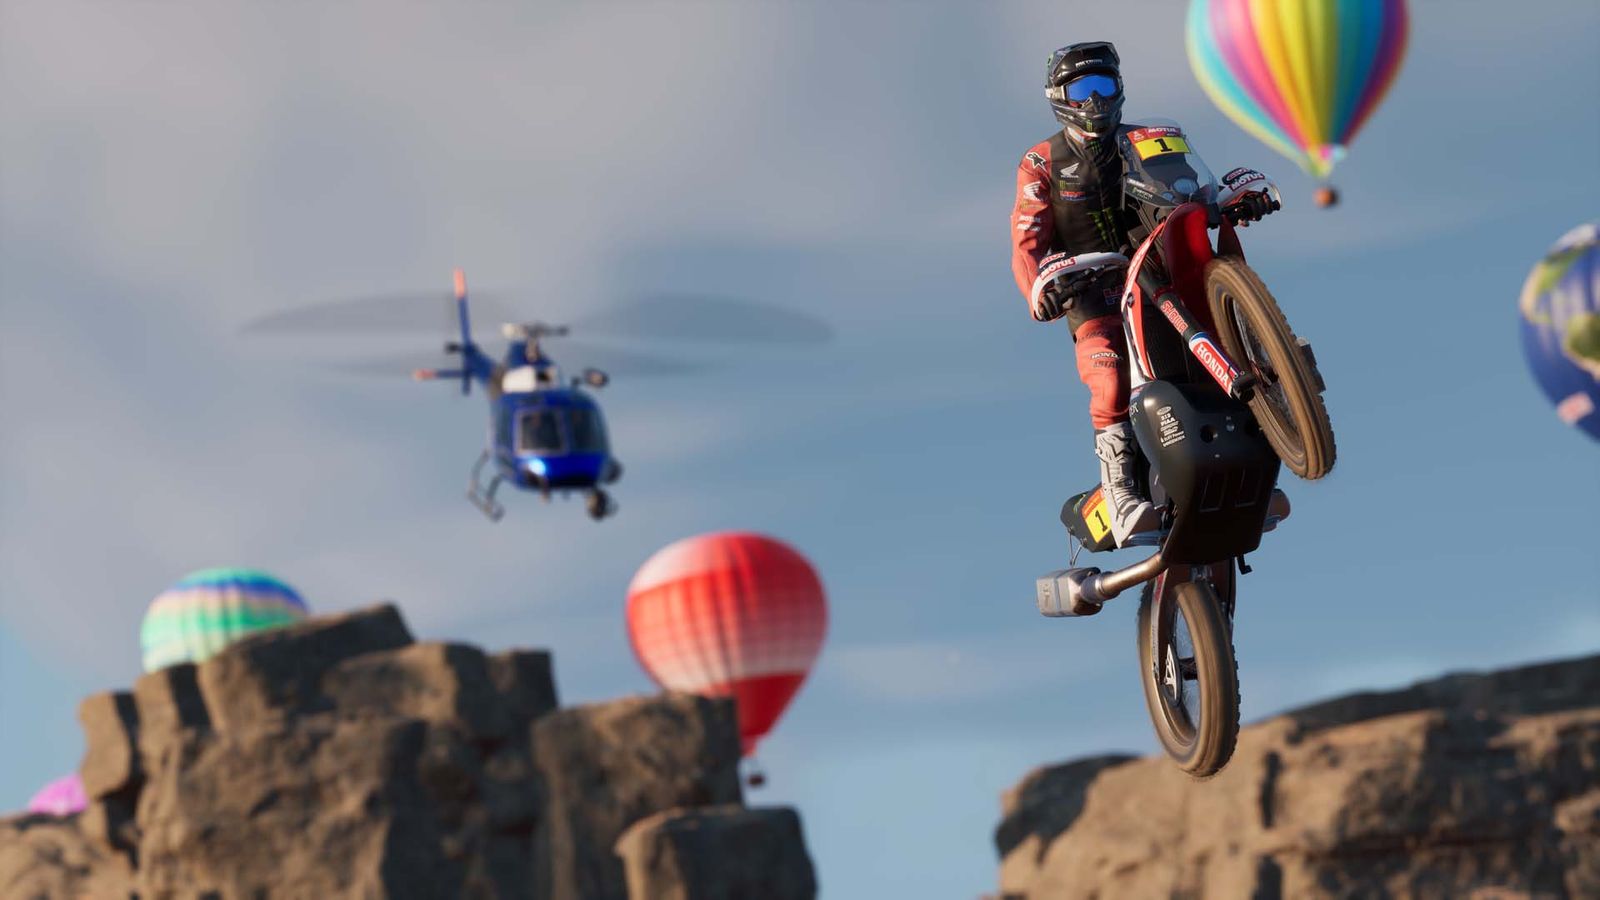 Dakar Desert Rally gameplay preview